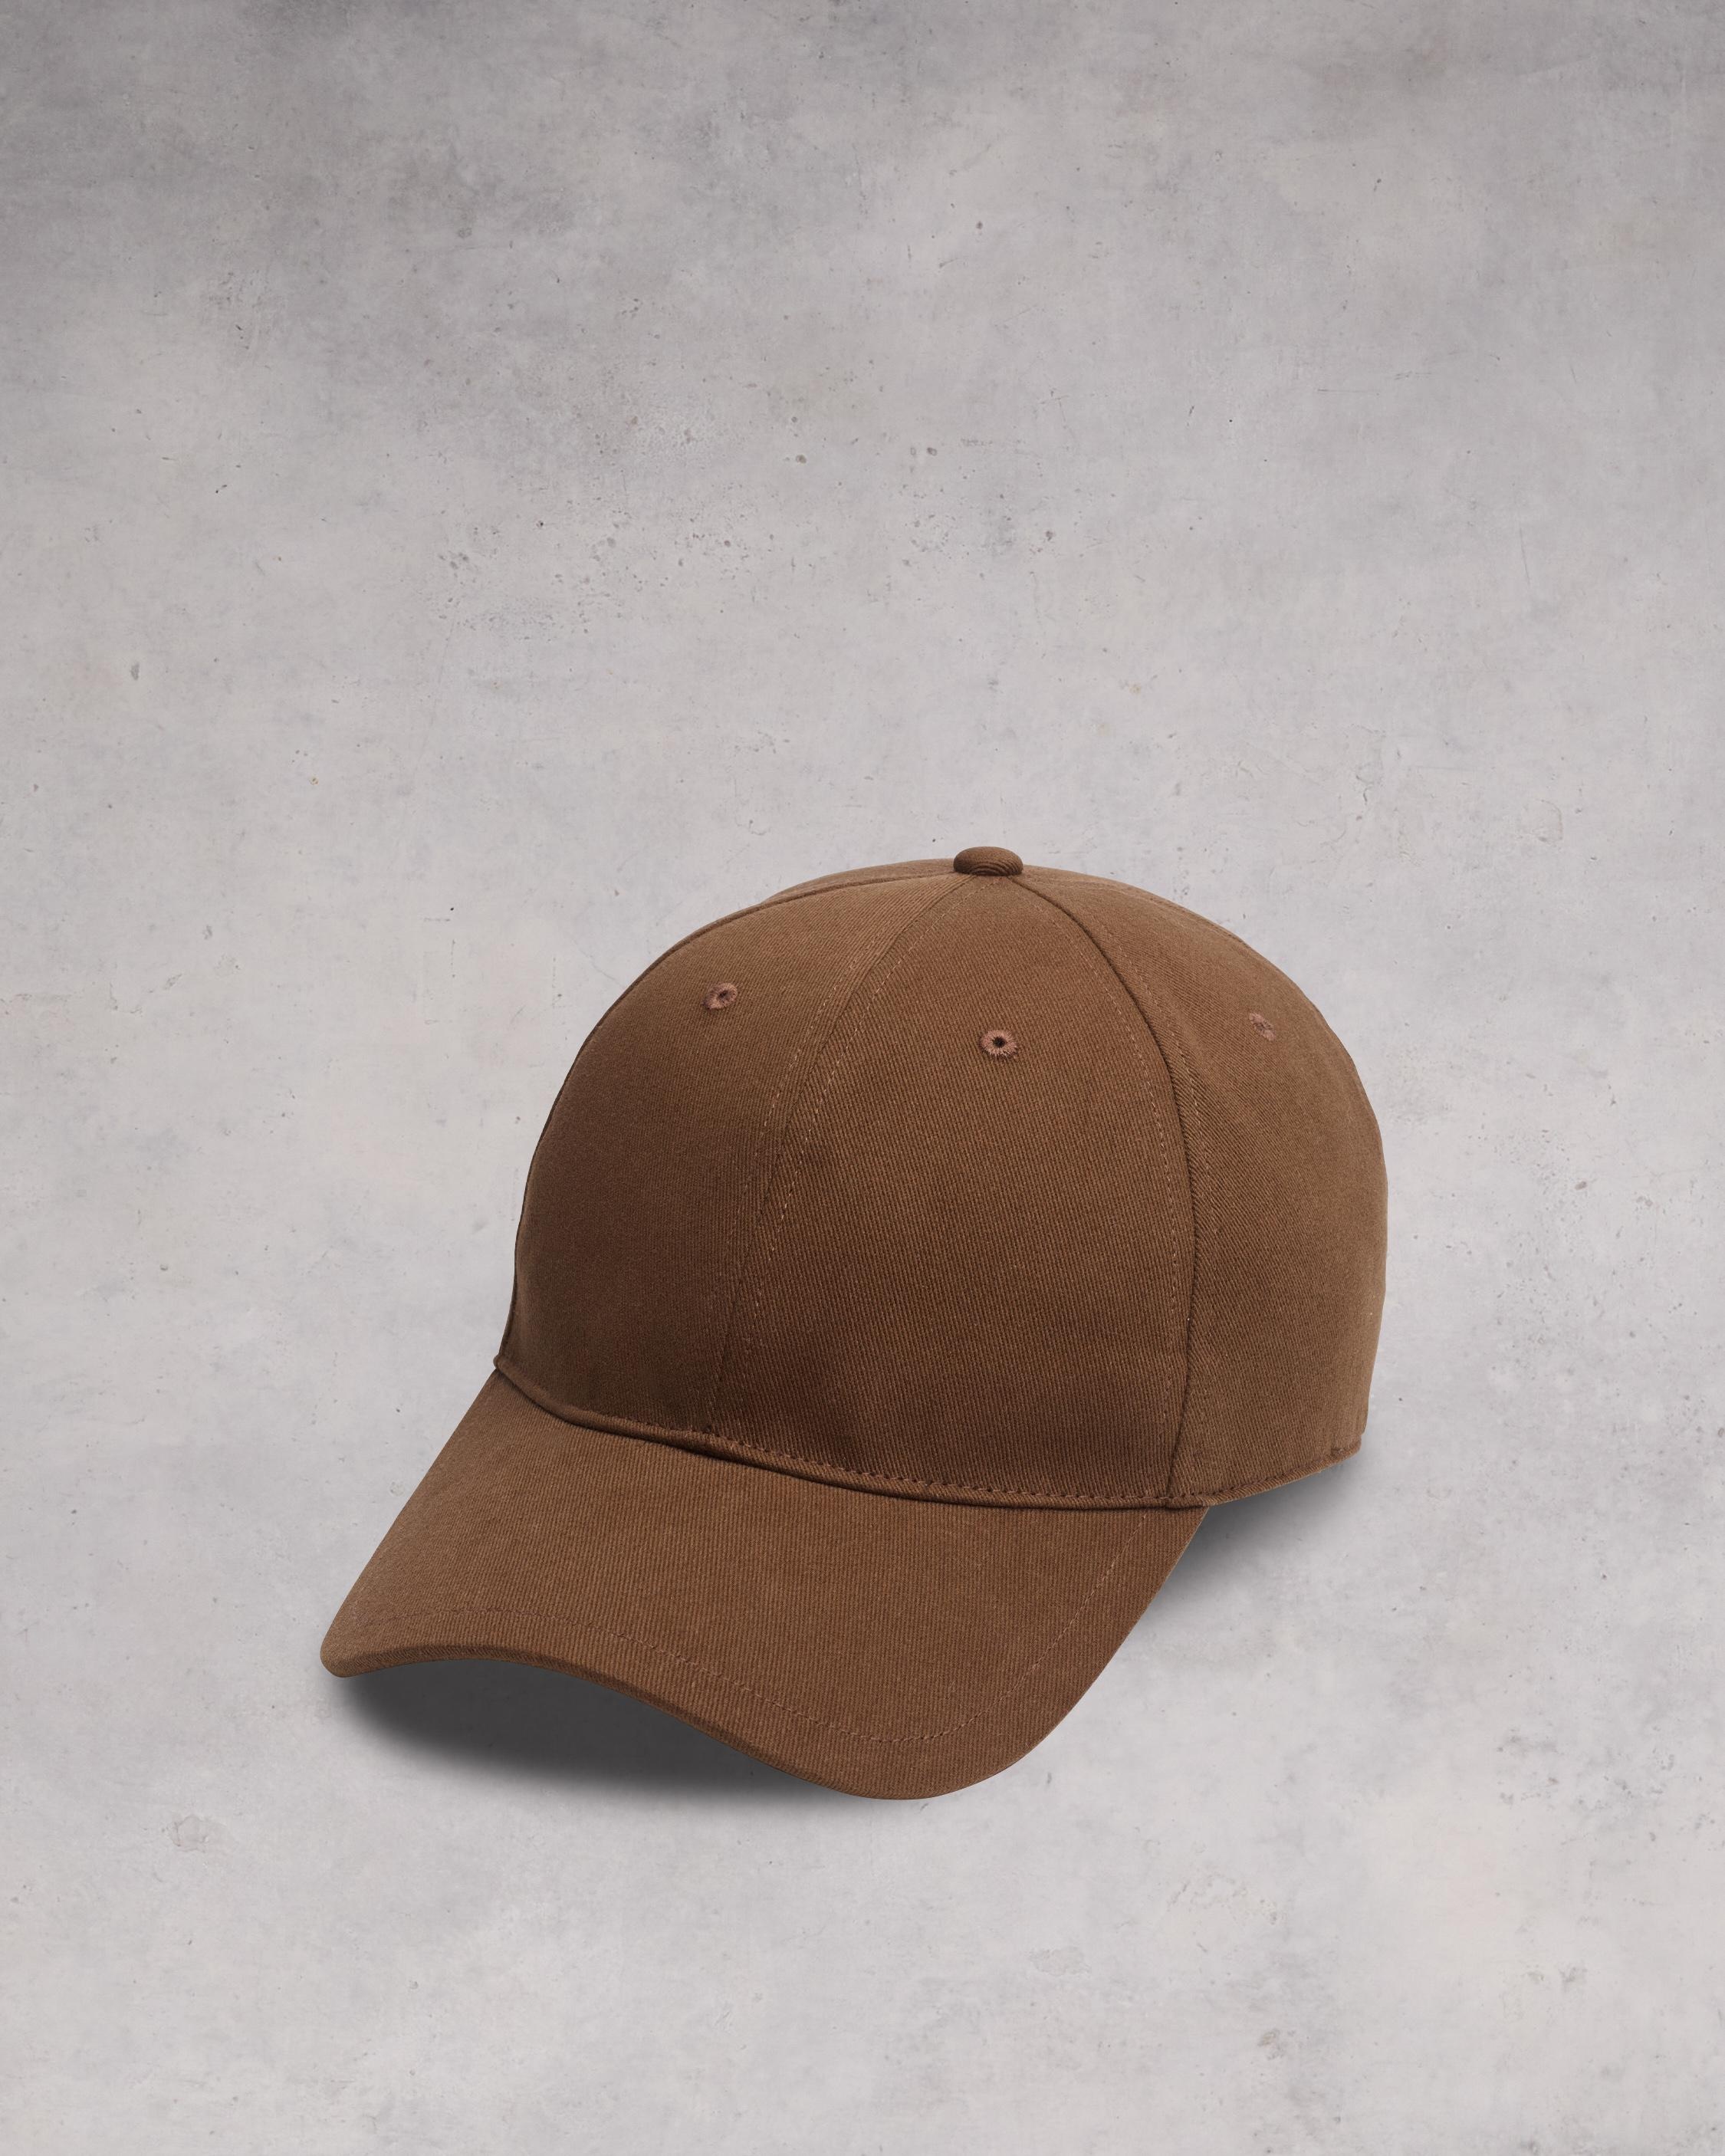 Miles Baseball Cap
Cotton Hat - 1